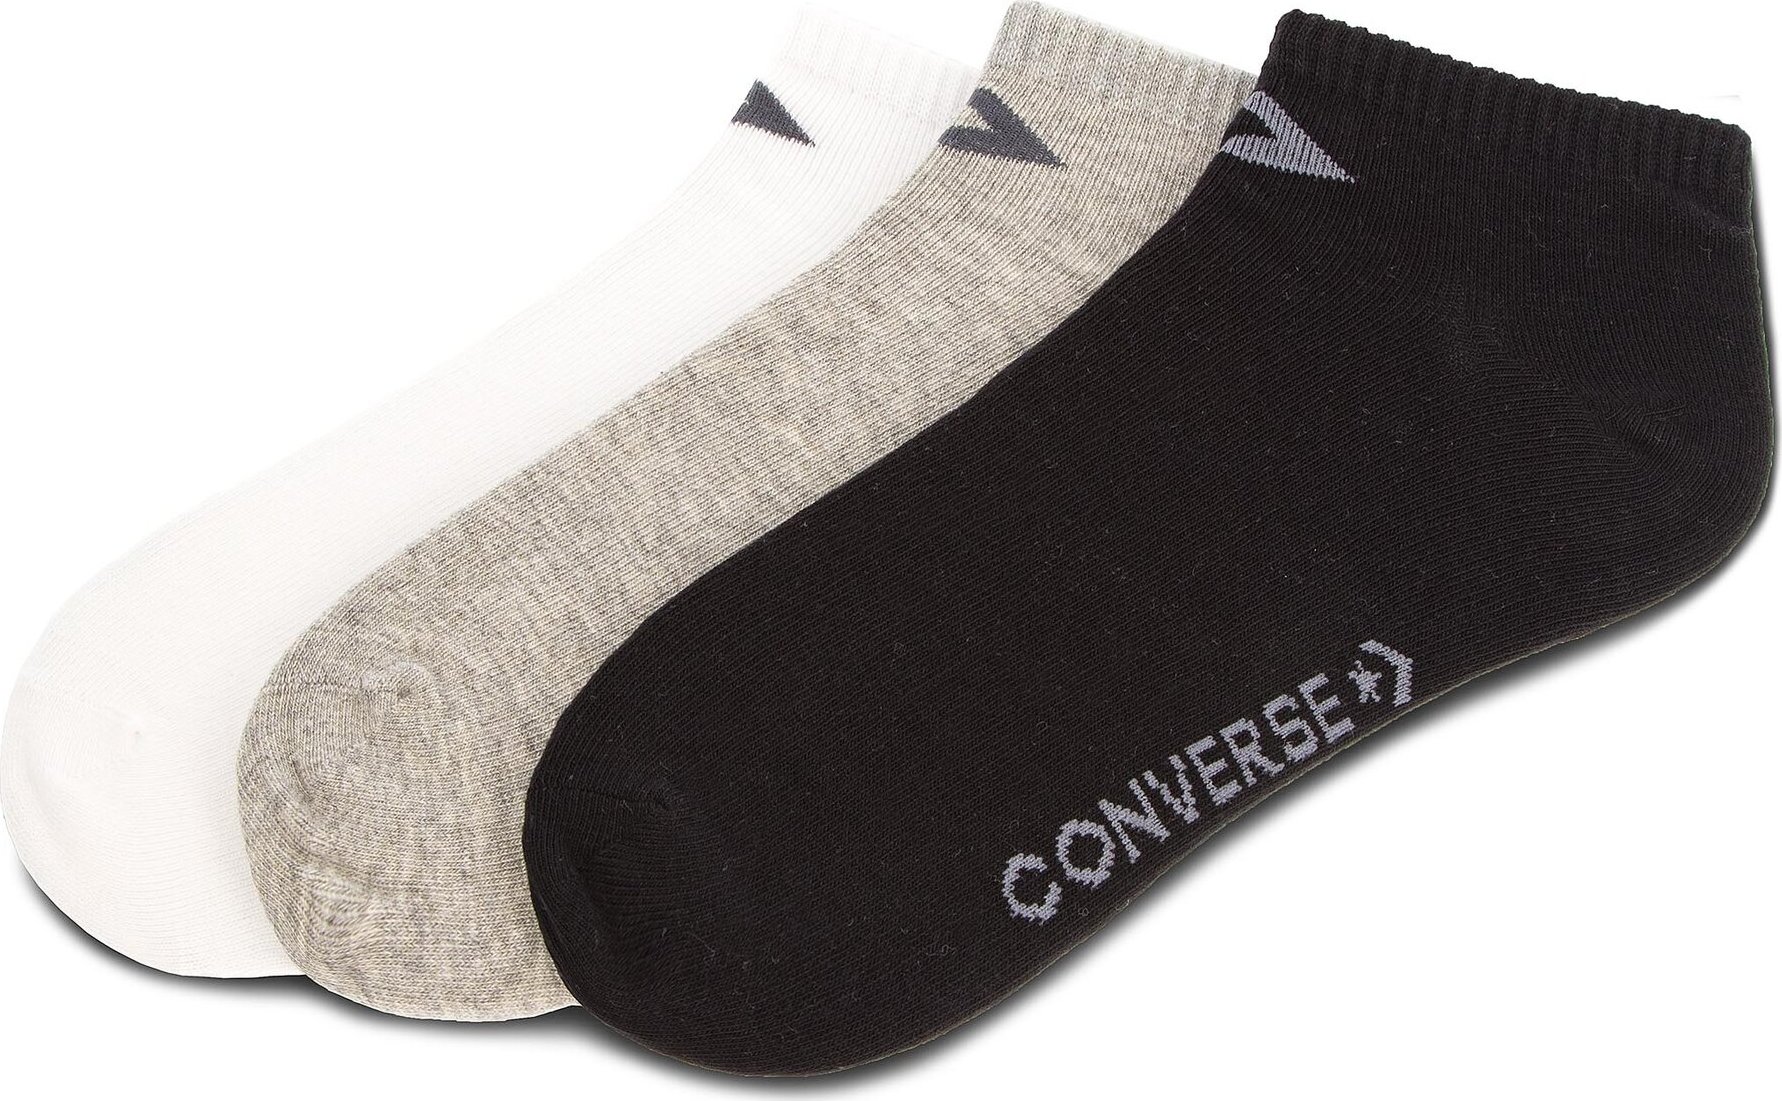 Sada 3 párů nízkých ponožek unisex Converse E747A-3010 Bílá